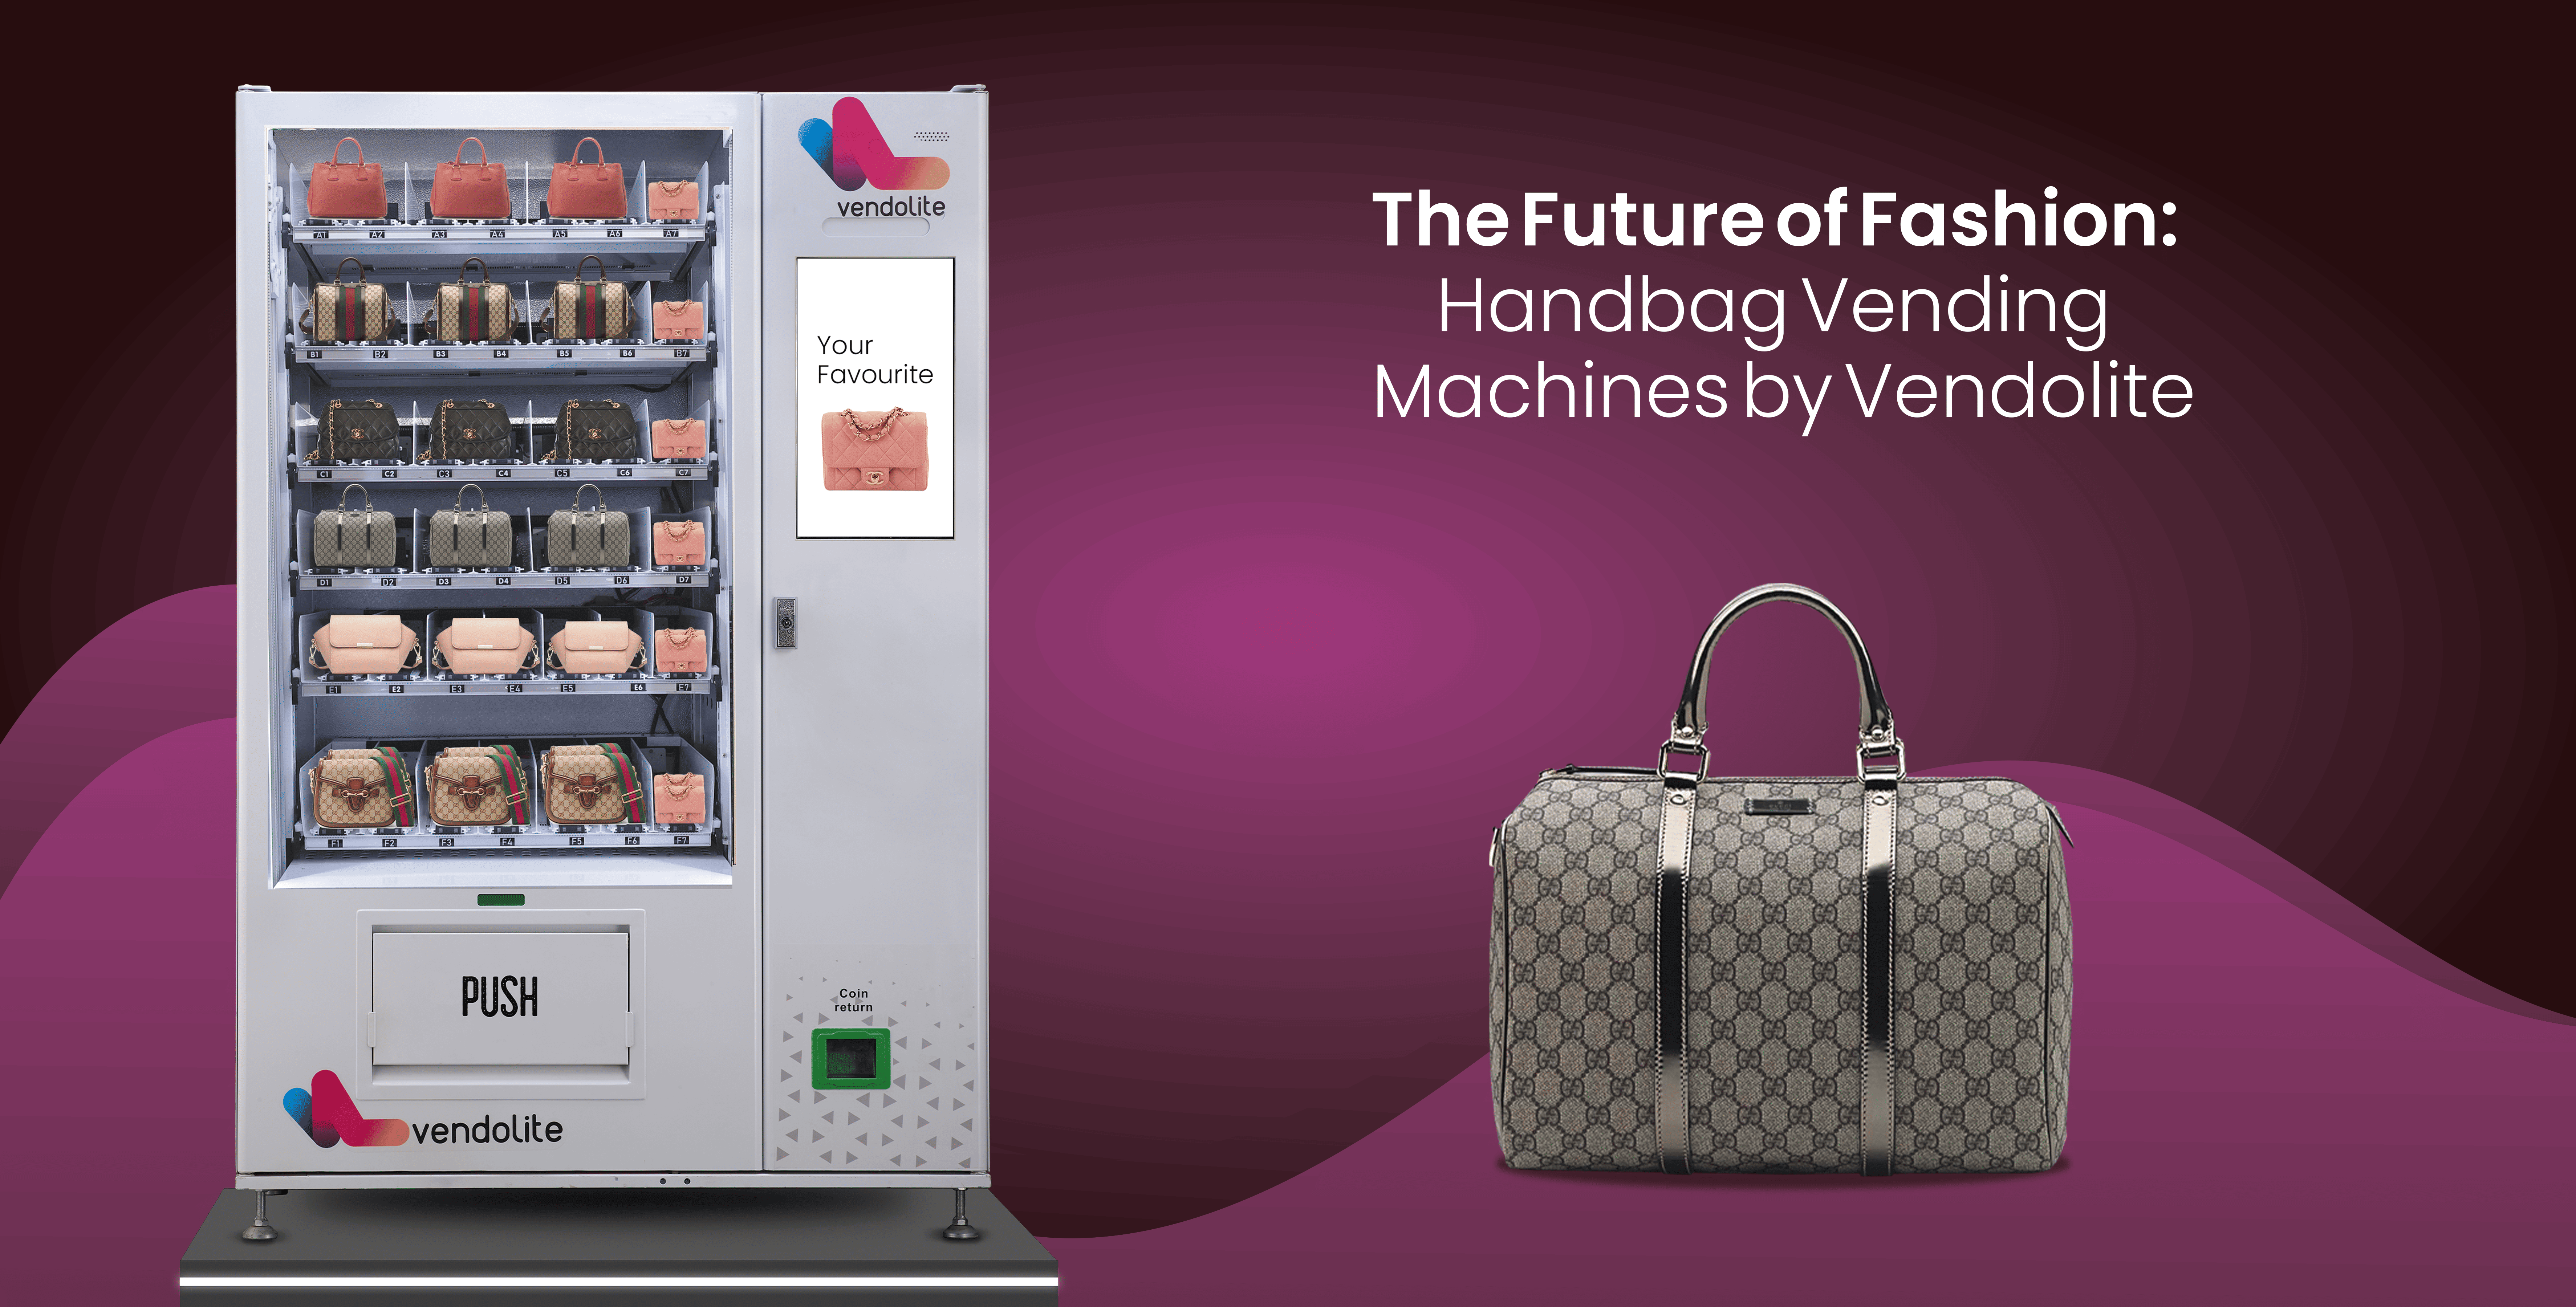 The Future of Fashion: Handbag Vending Machines by Vendolite